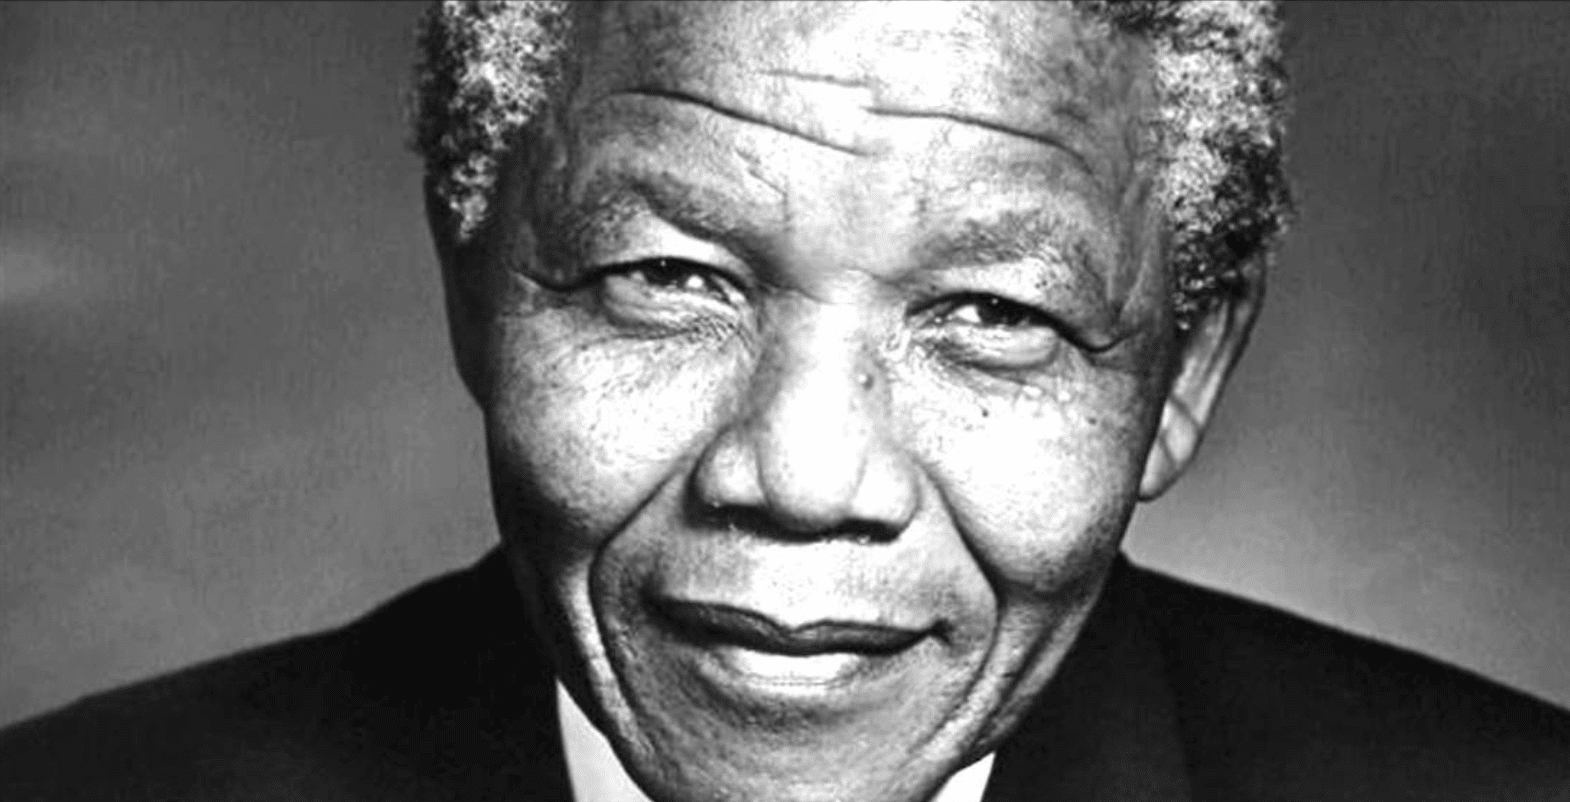 Ocho características imprescindibles para un buen líder político, según Mandela